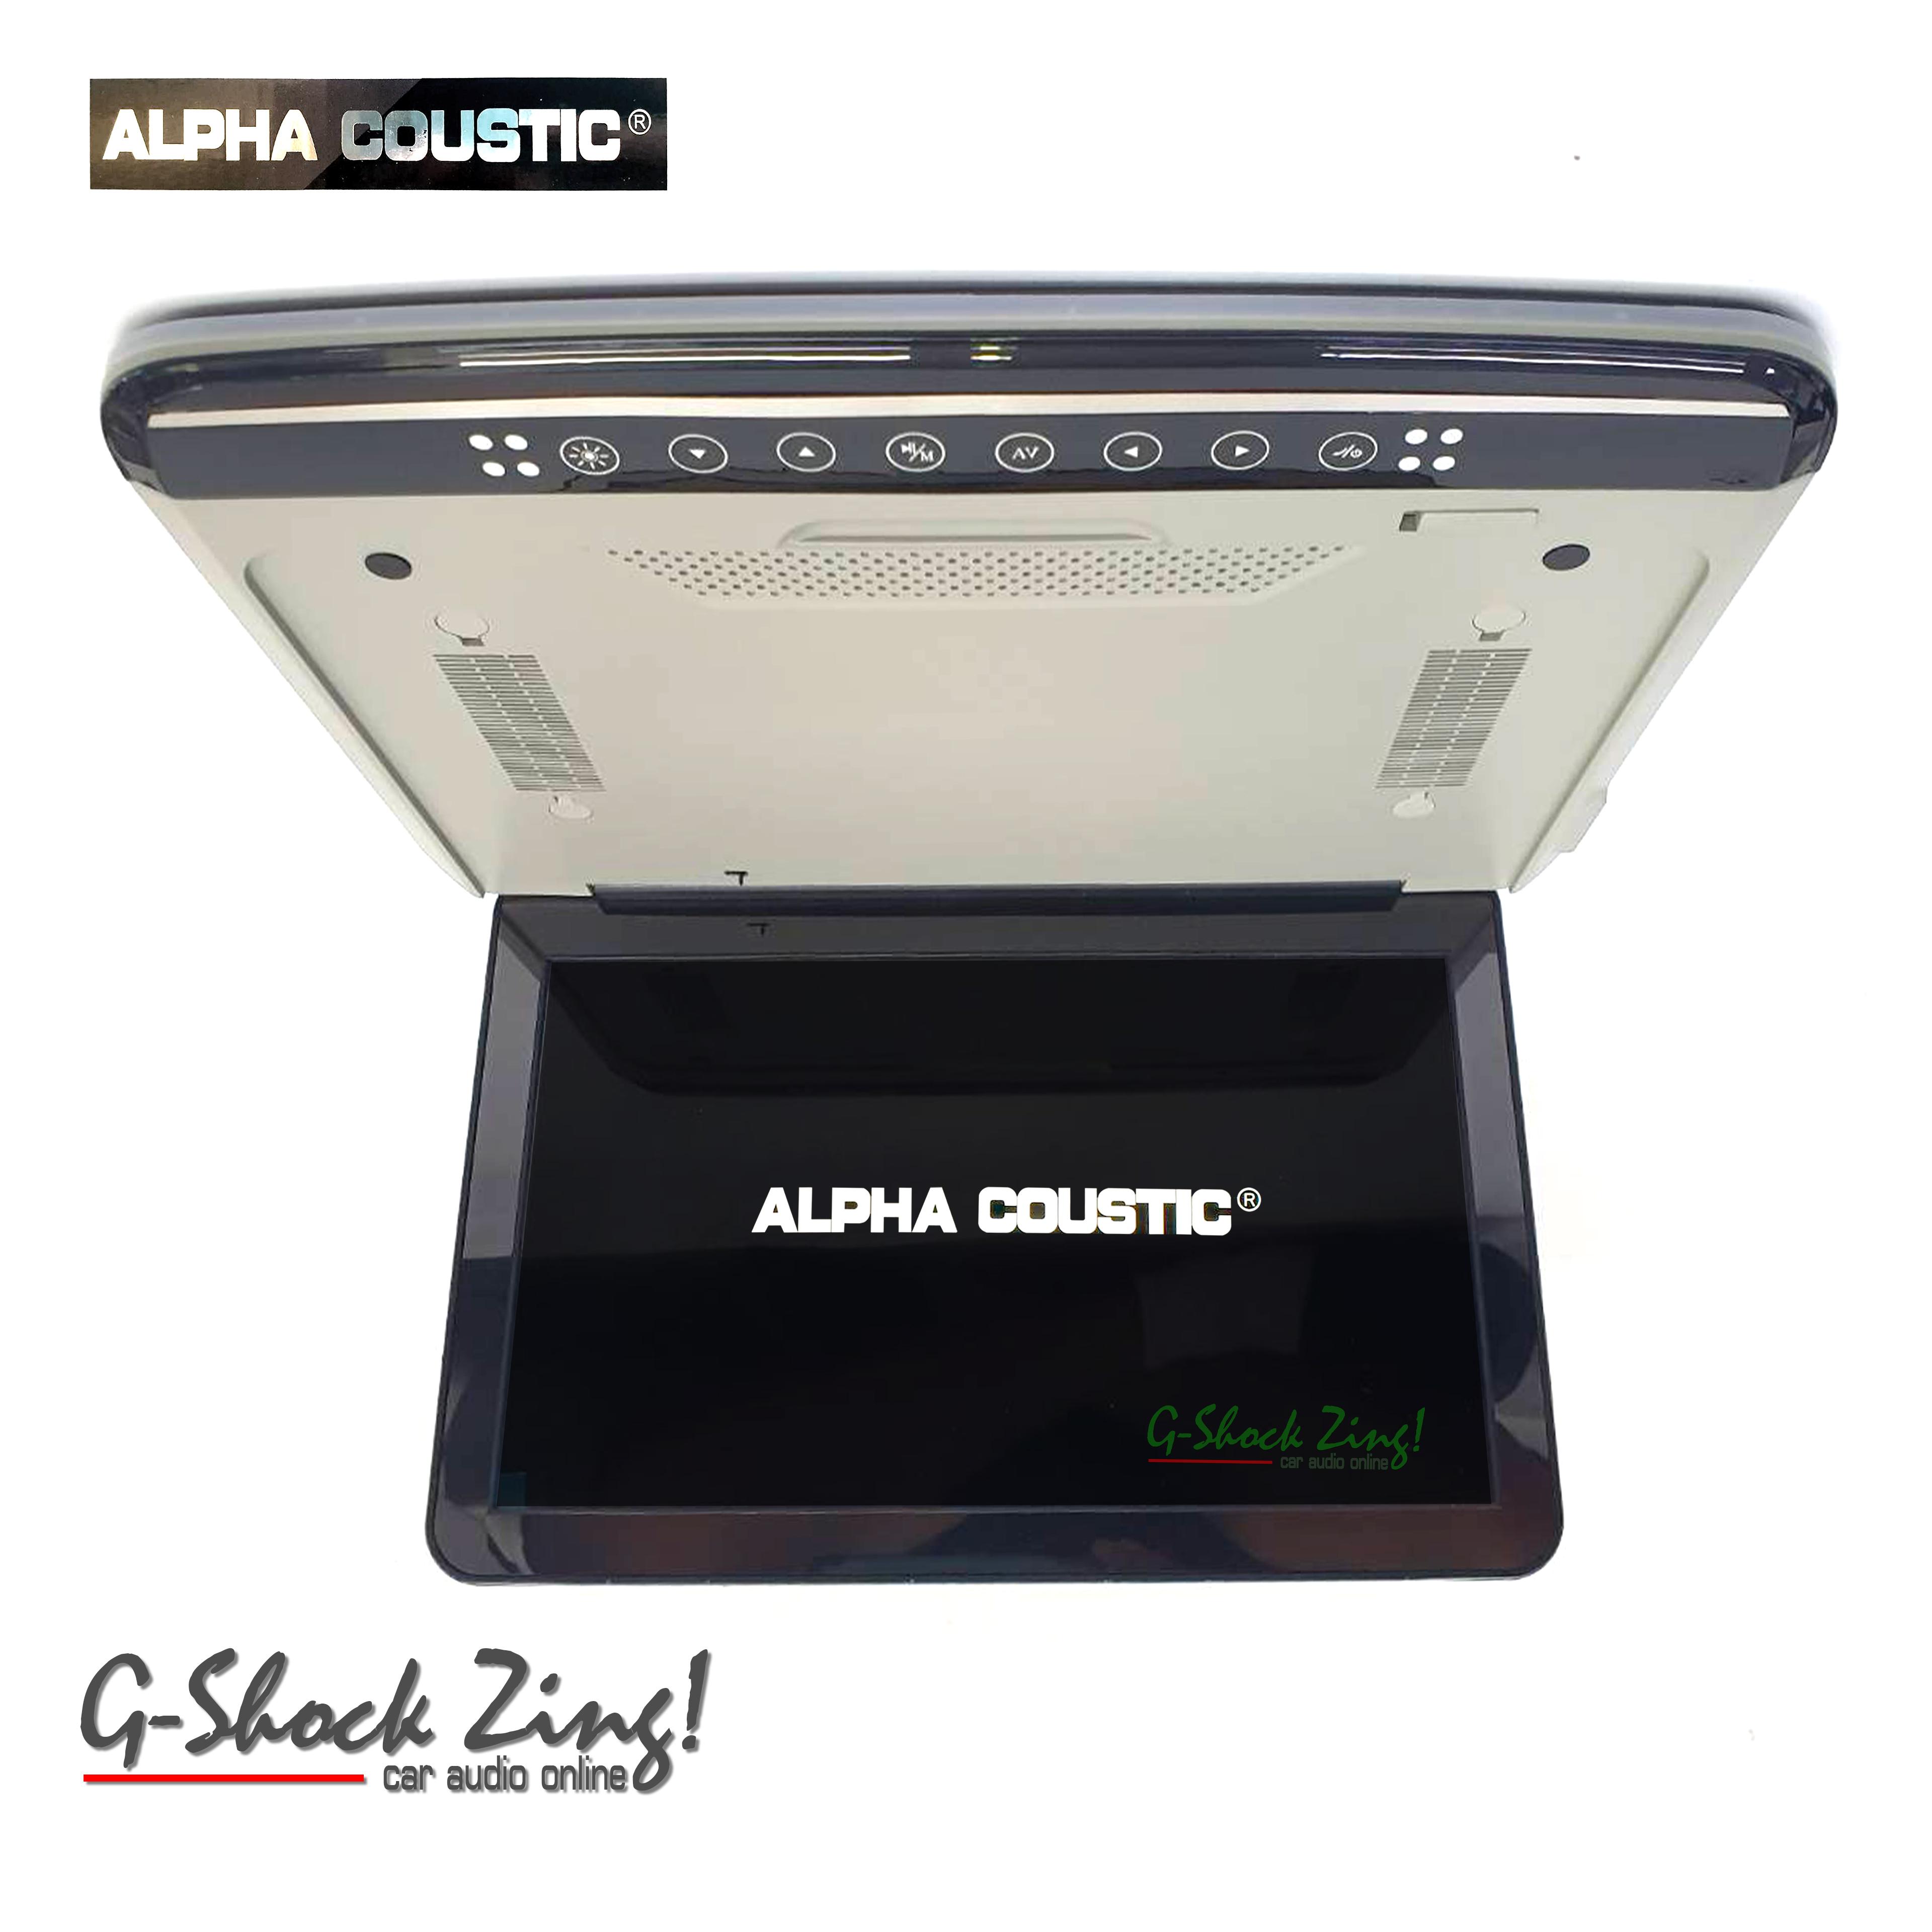 ALPHA COUSTIC Roofmount Monitor เครื่องเสียงรถยนต์/จอเพดานติดรถยนต์ ขนาดจอ 13.3นิ้ว HDMI IN /USB SLOT/SD SLOT (สี GRAY)